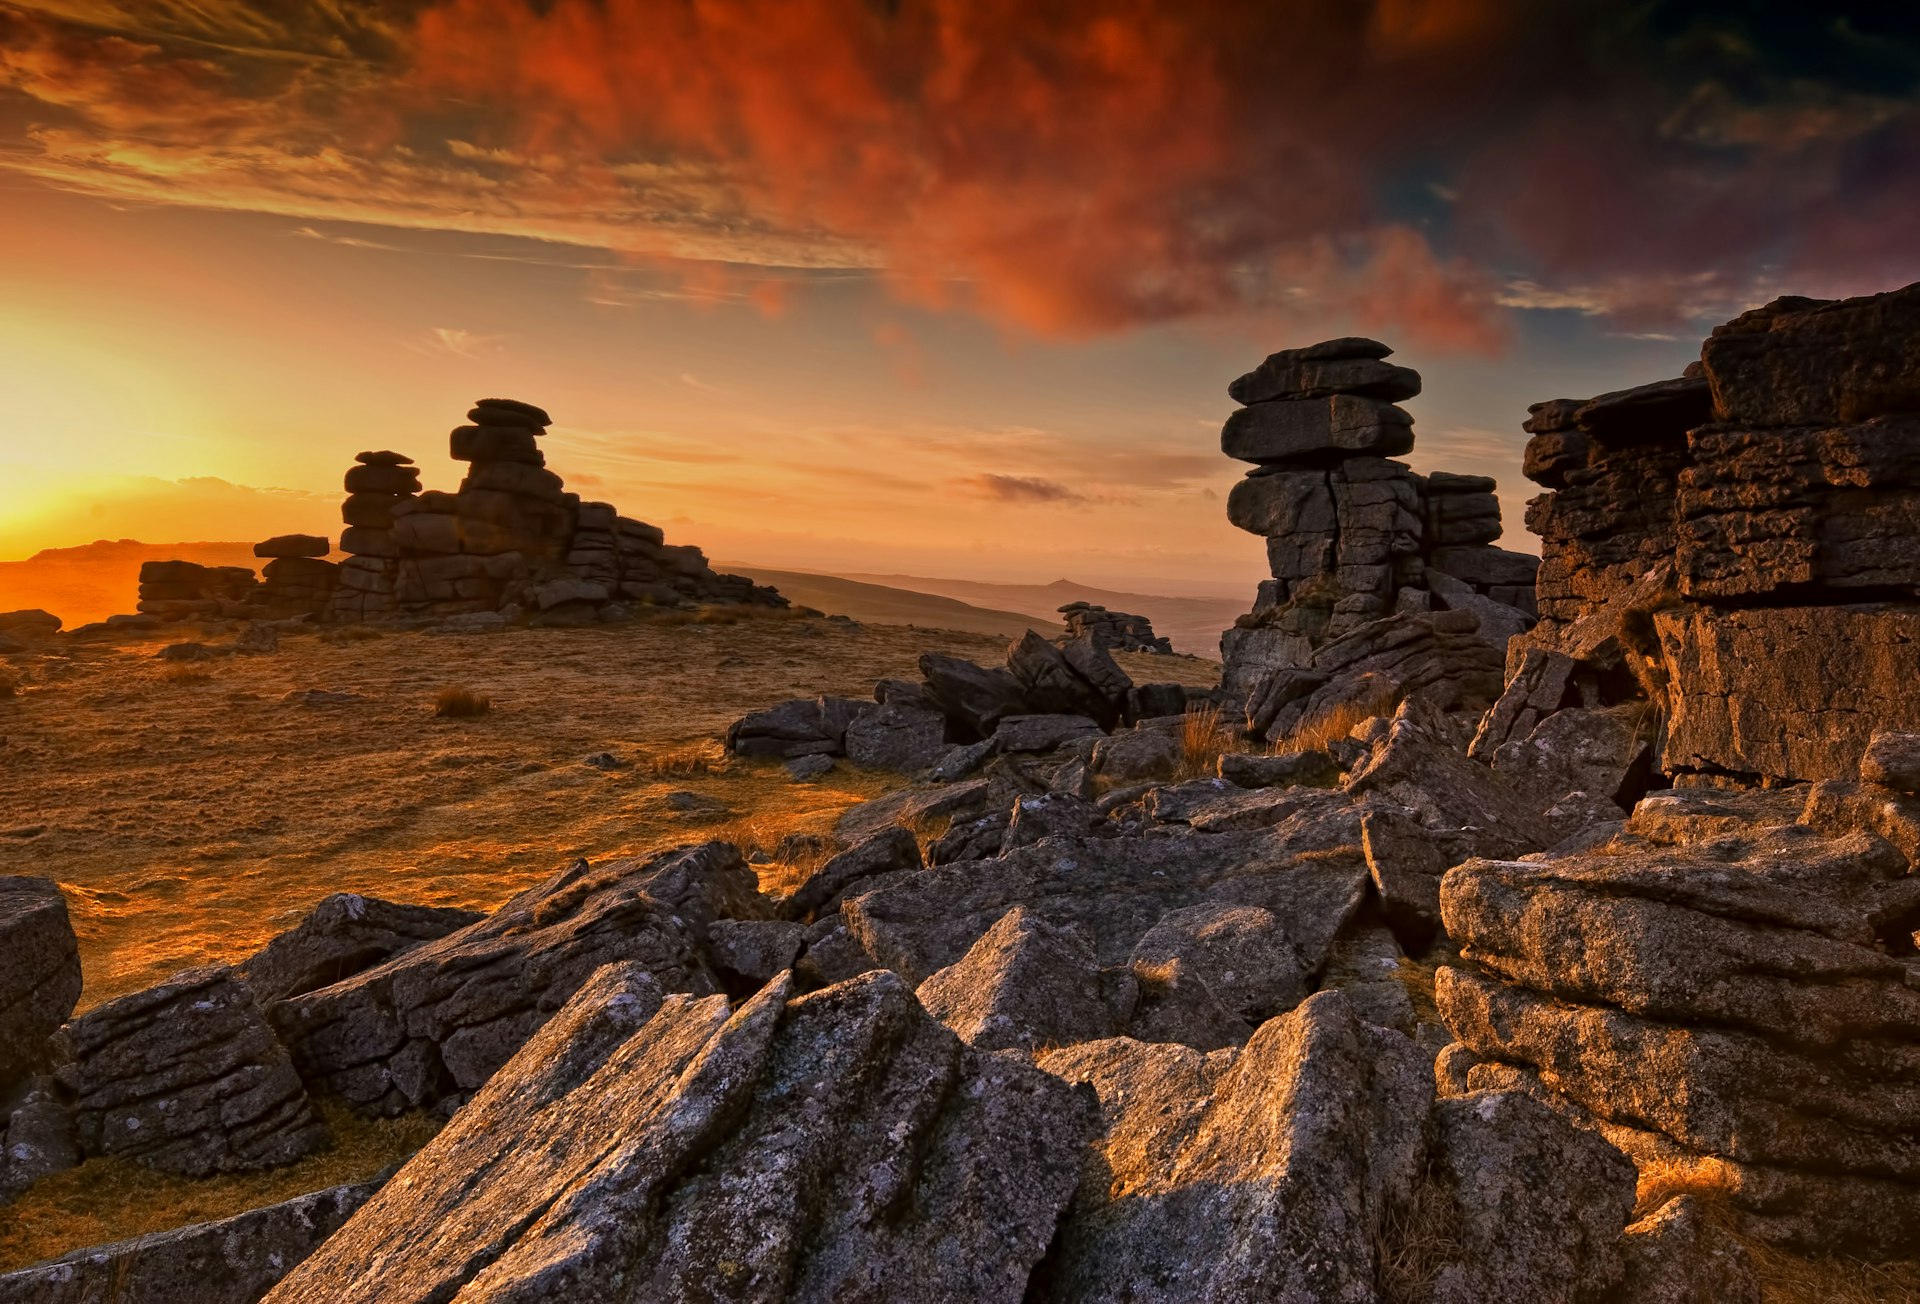 The sun sets behind tors, large granite stacks of rocks, on deserted moorland